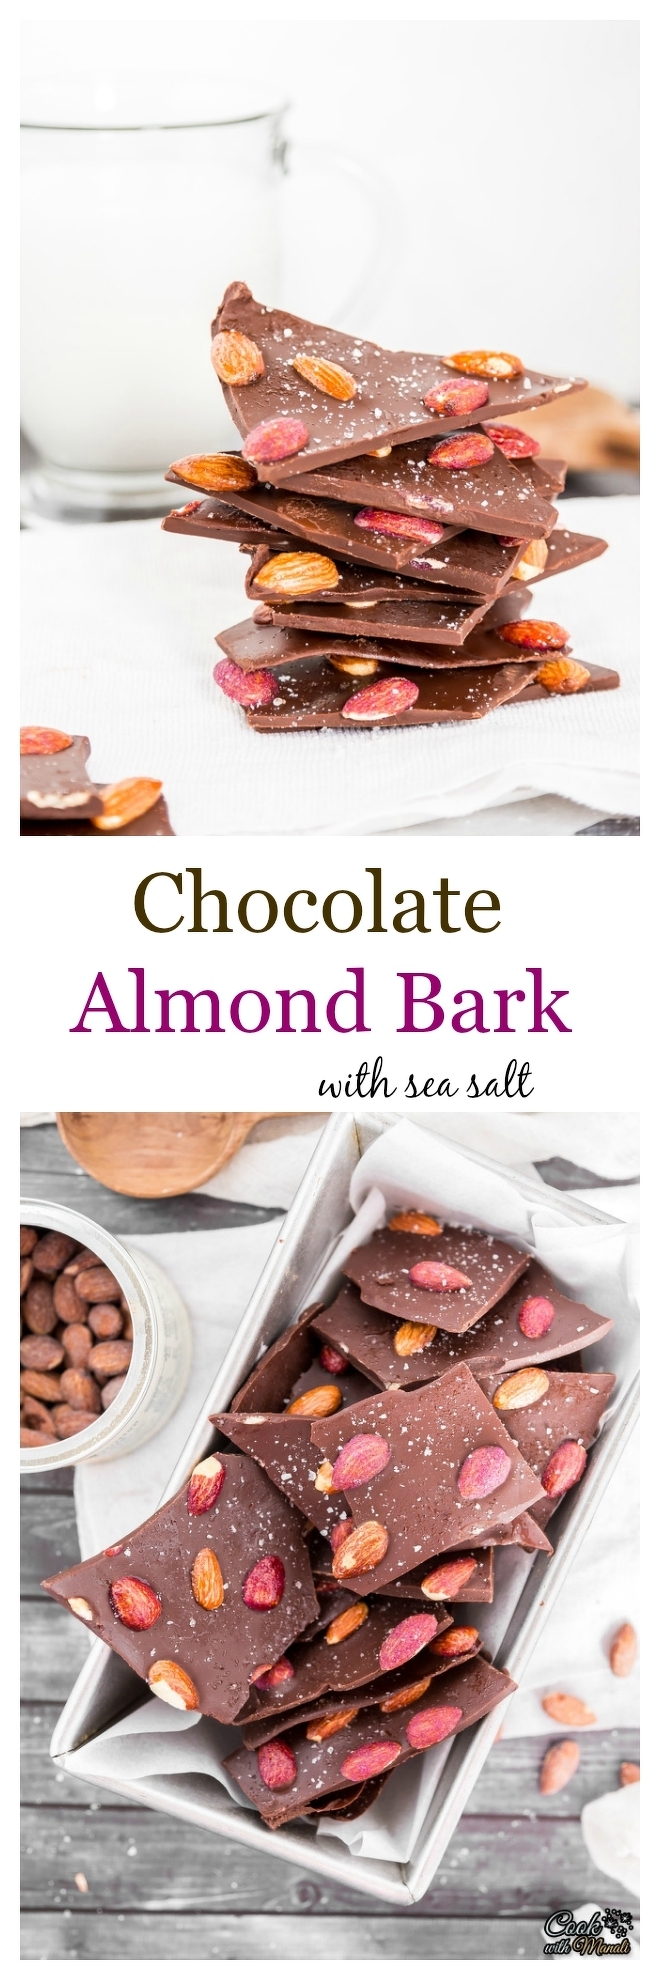 Chocolate Almond Bark with Sea Salt Collage-nocwm